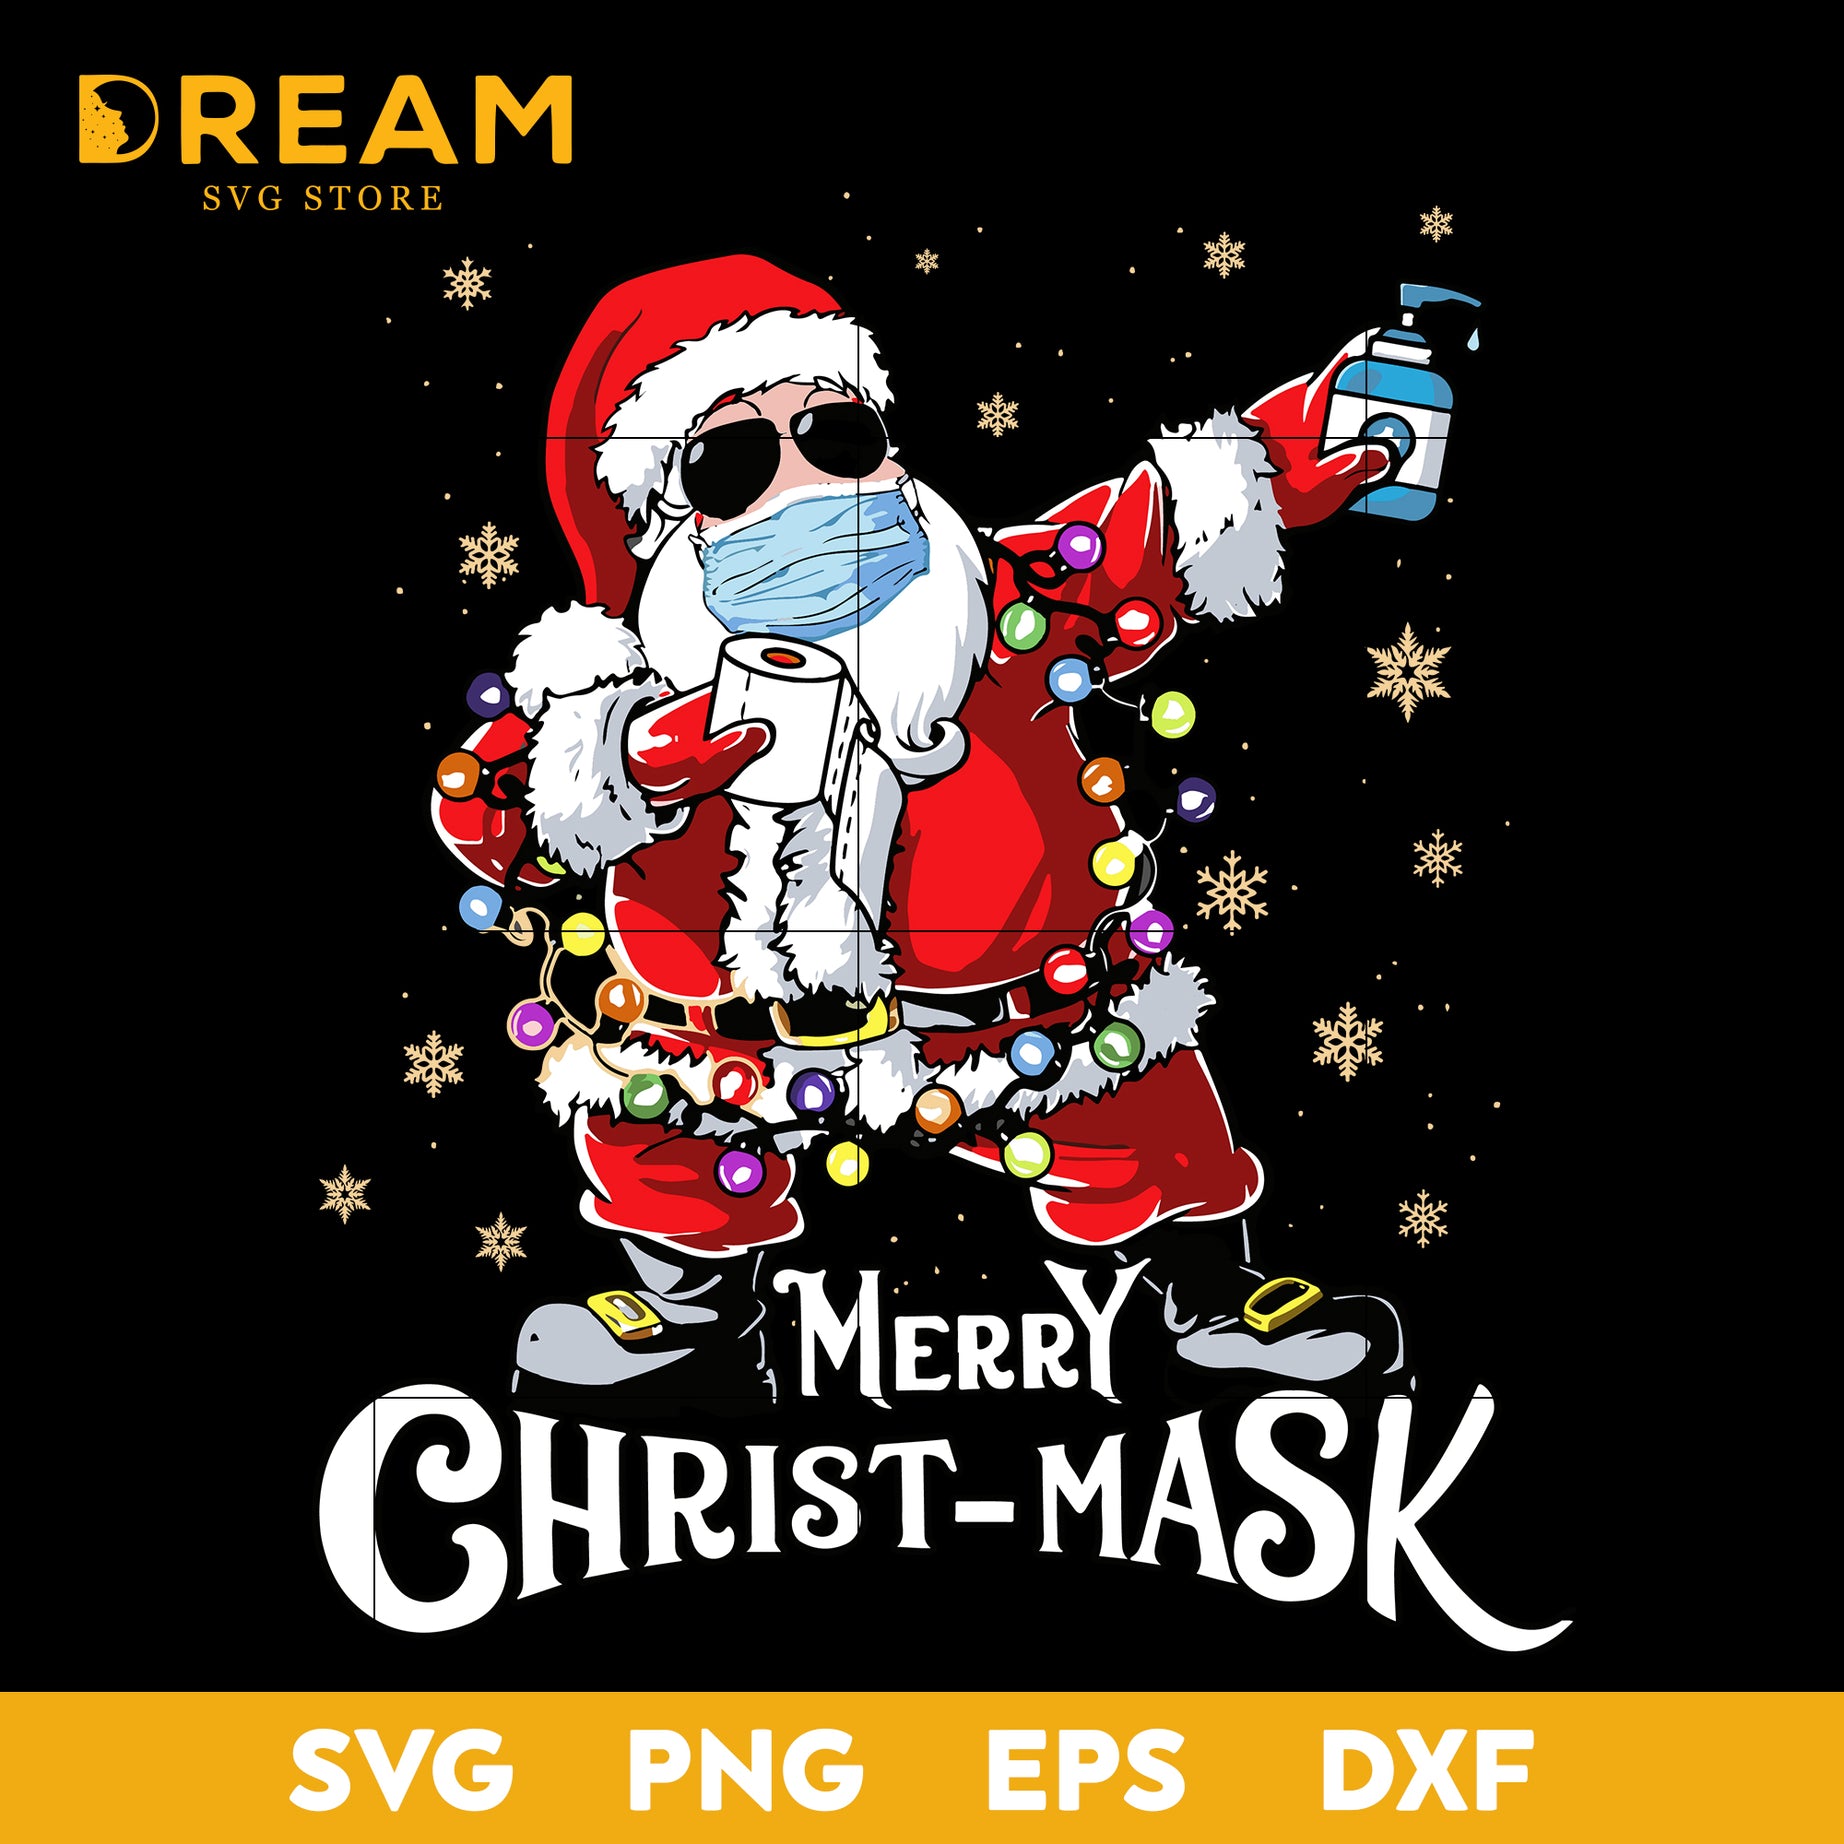 Santa merry chistmask svg, Christmas svg, png, dxf, eps digital file CRM12112012L